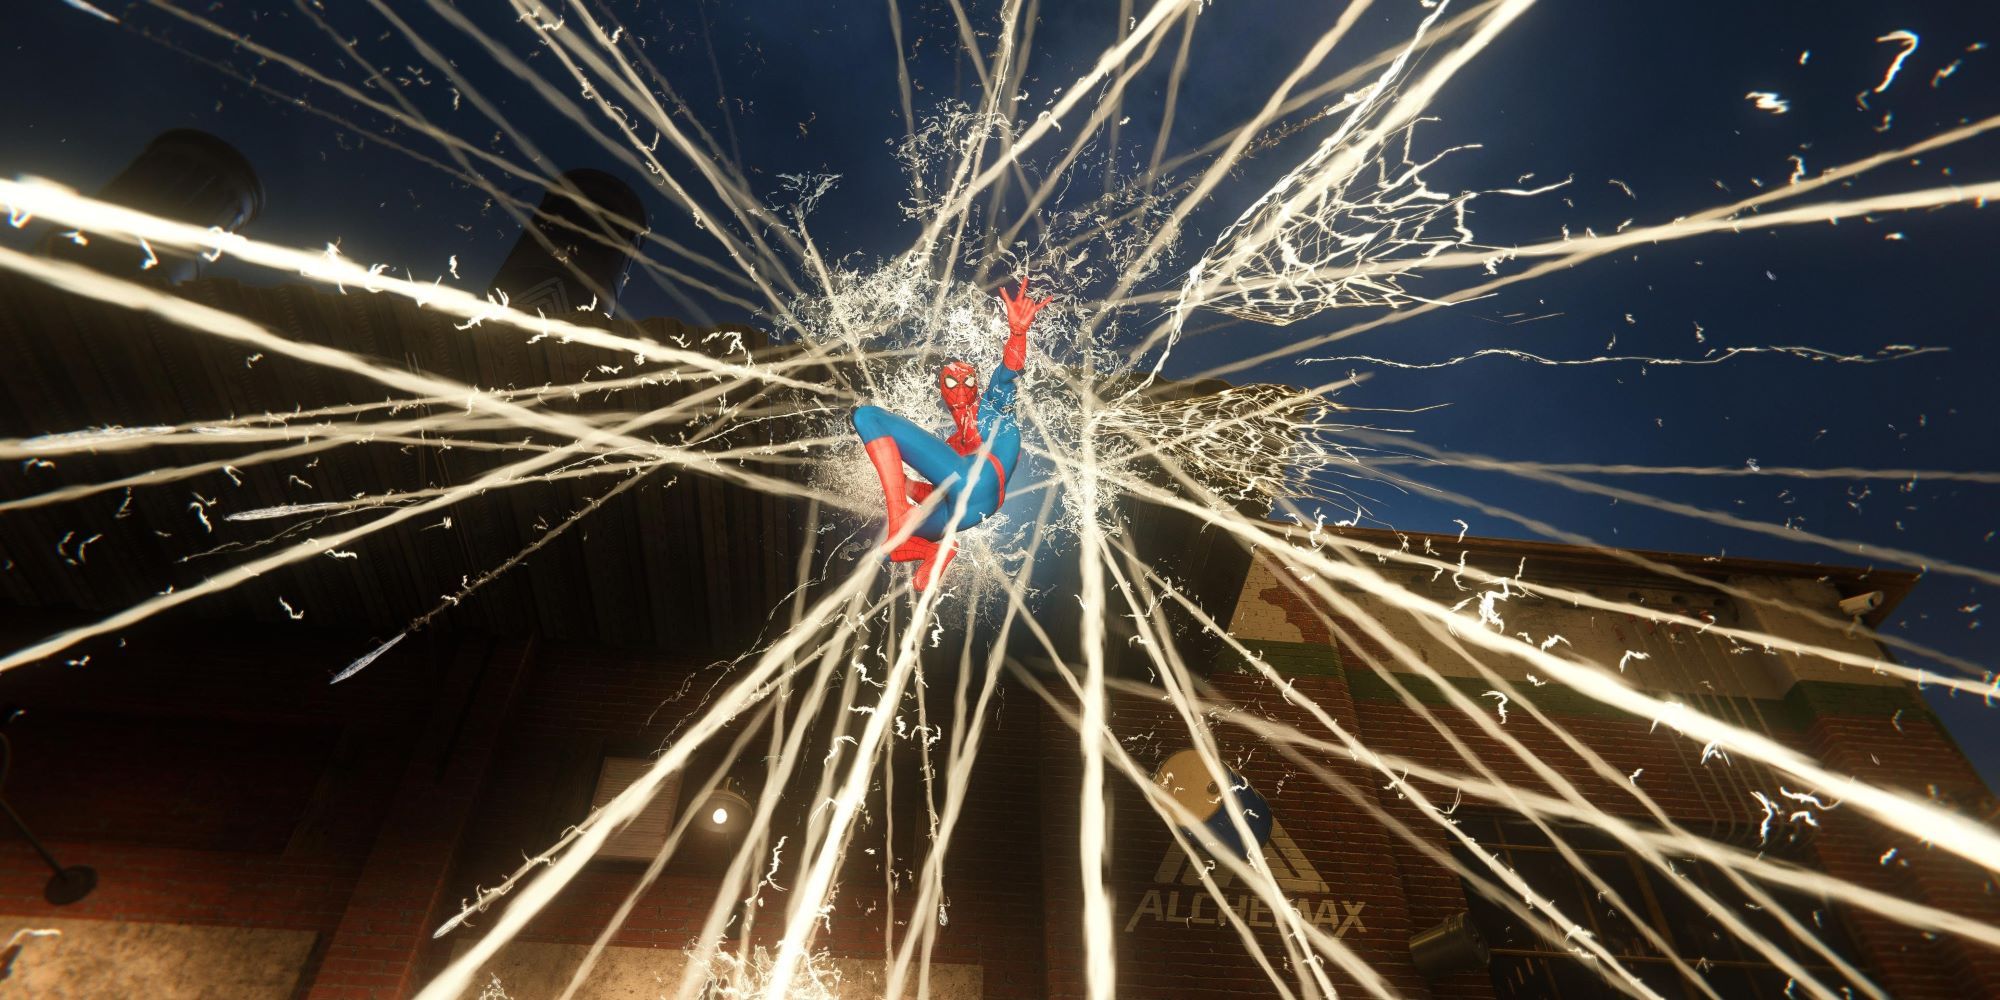 Marvel's Spider-Man Remastered, Spider-Man using his web spray power